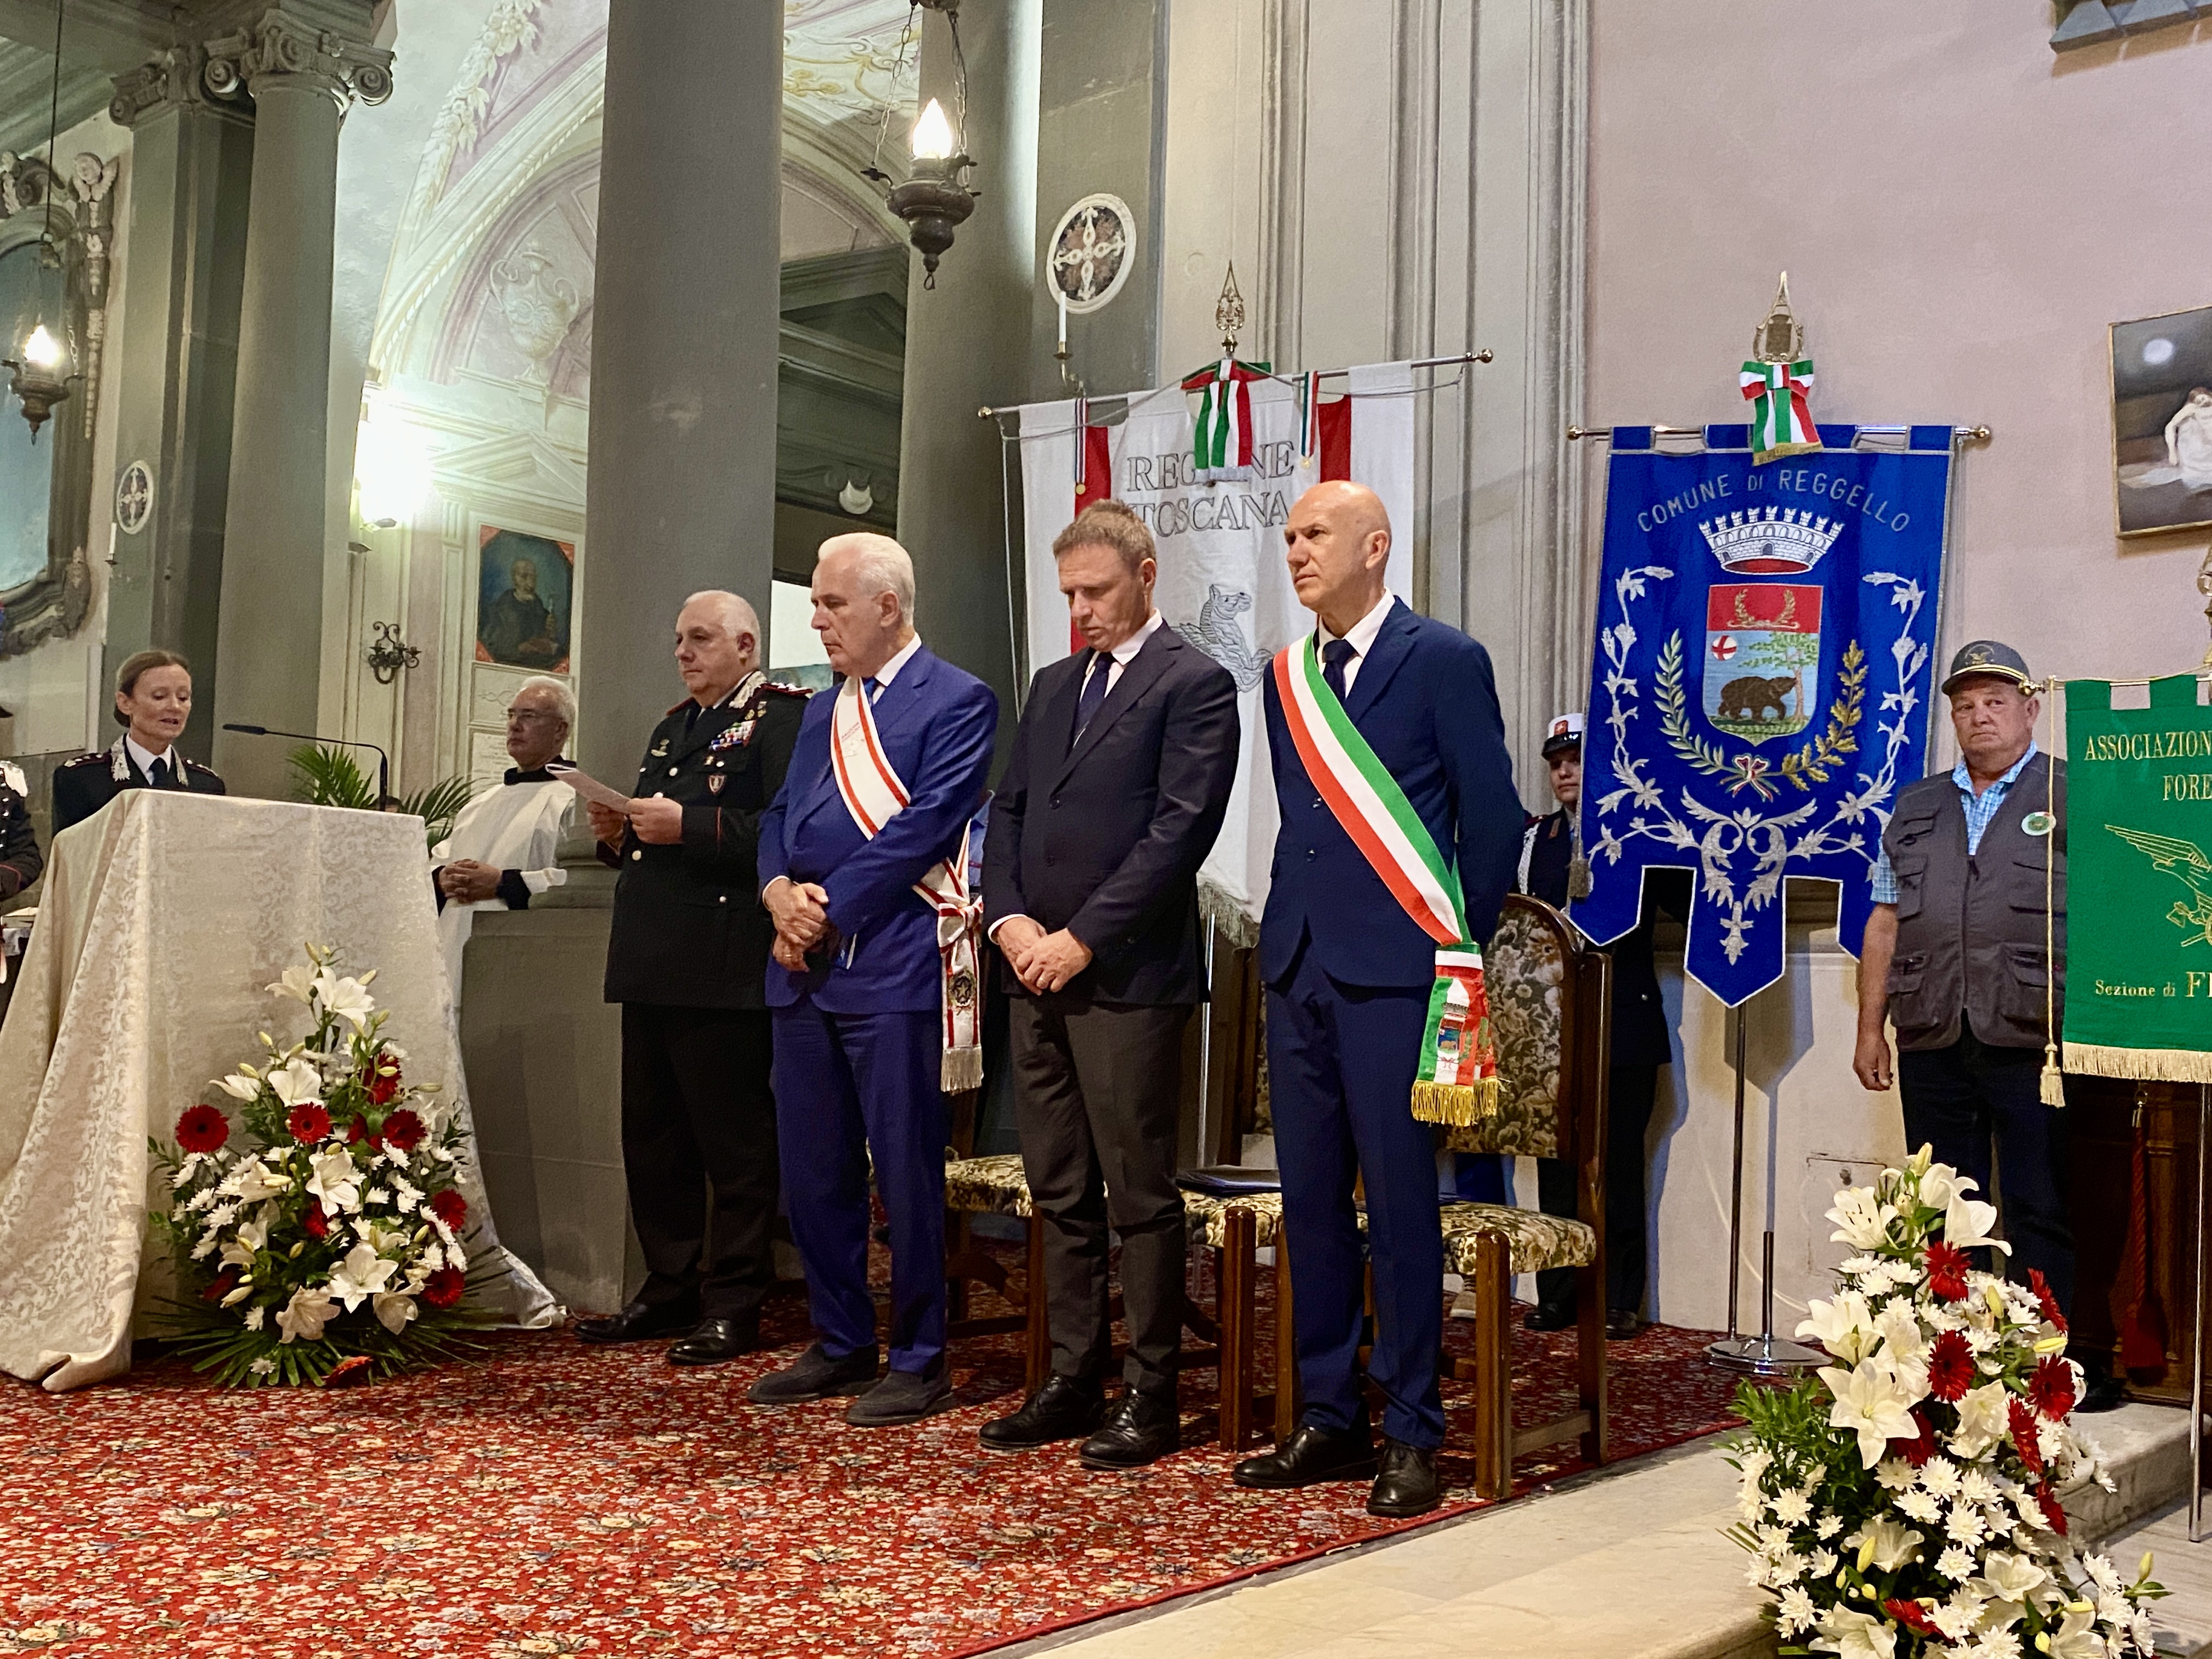 Teo Luzi, Eugenio Giani, Francesco Lollobrigida, Piero Giunti